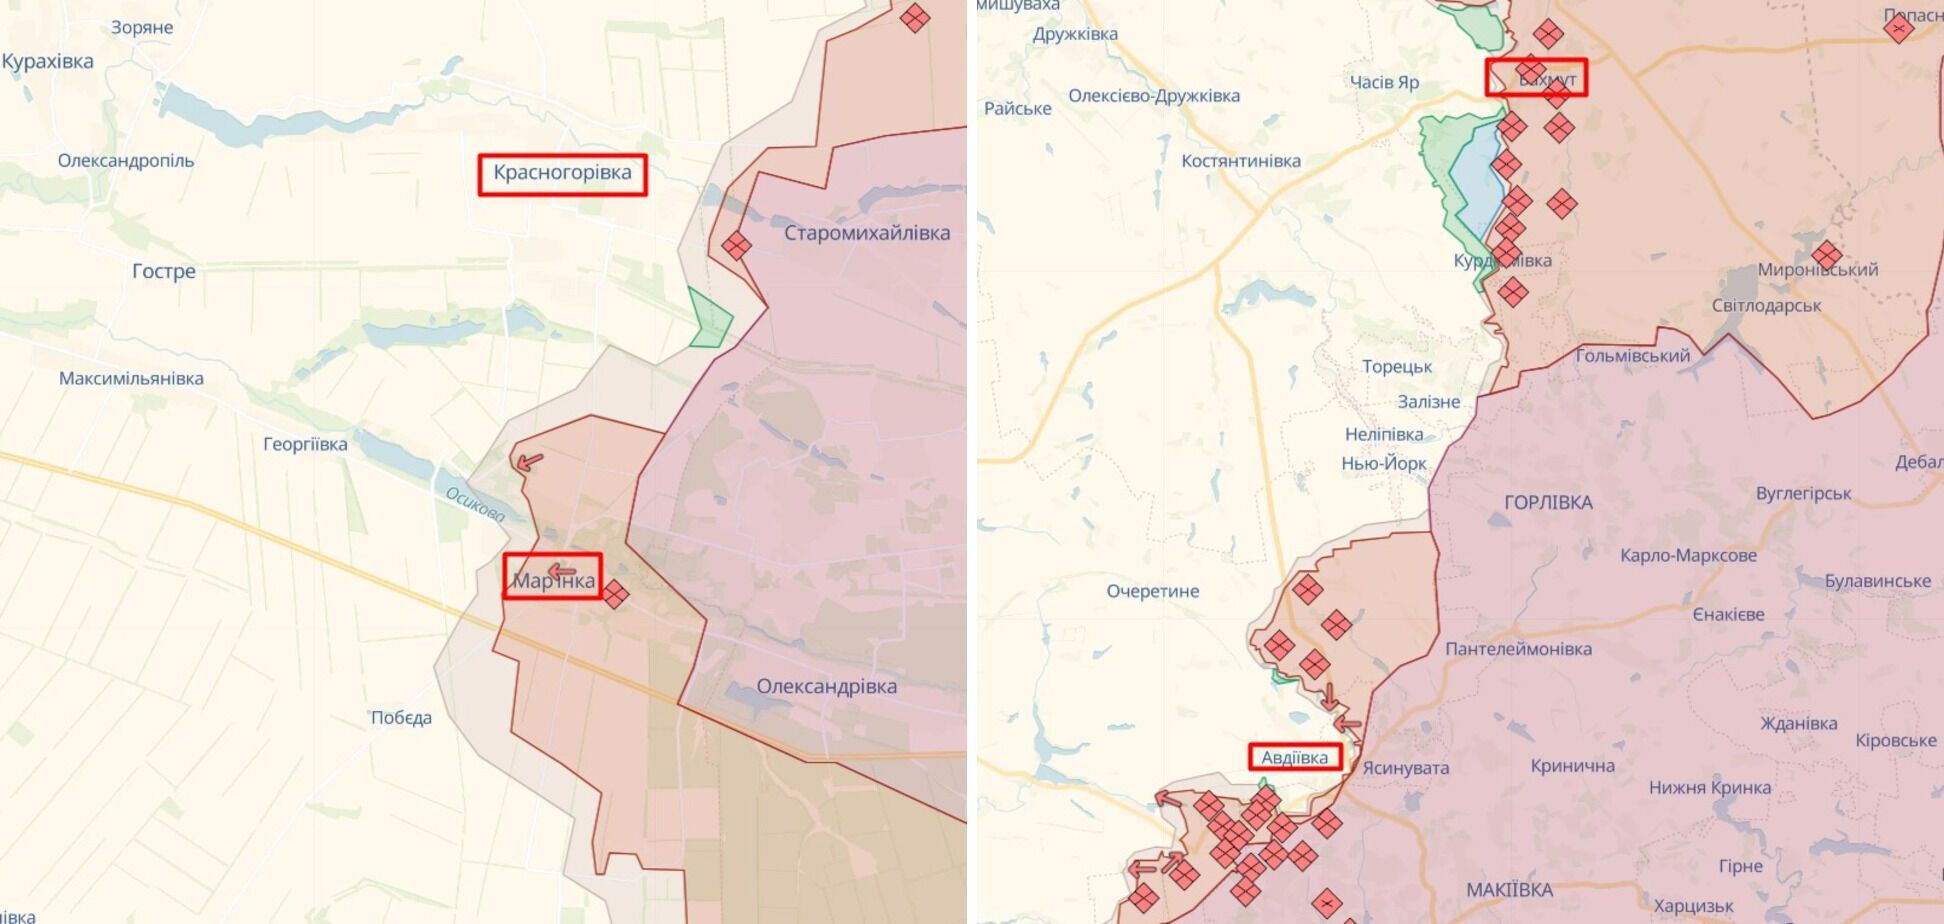 Russia struck Ukraine with Shaheds at night, AFU holds back occupants near Krasnohorivka and Maryinka - General Staff